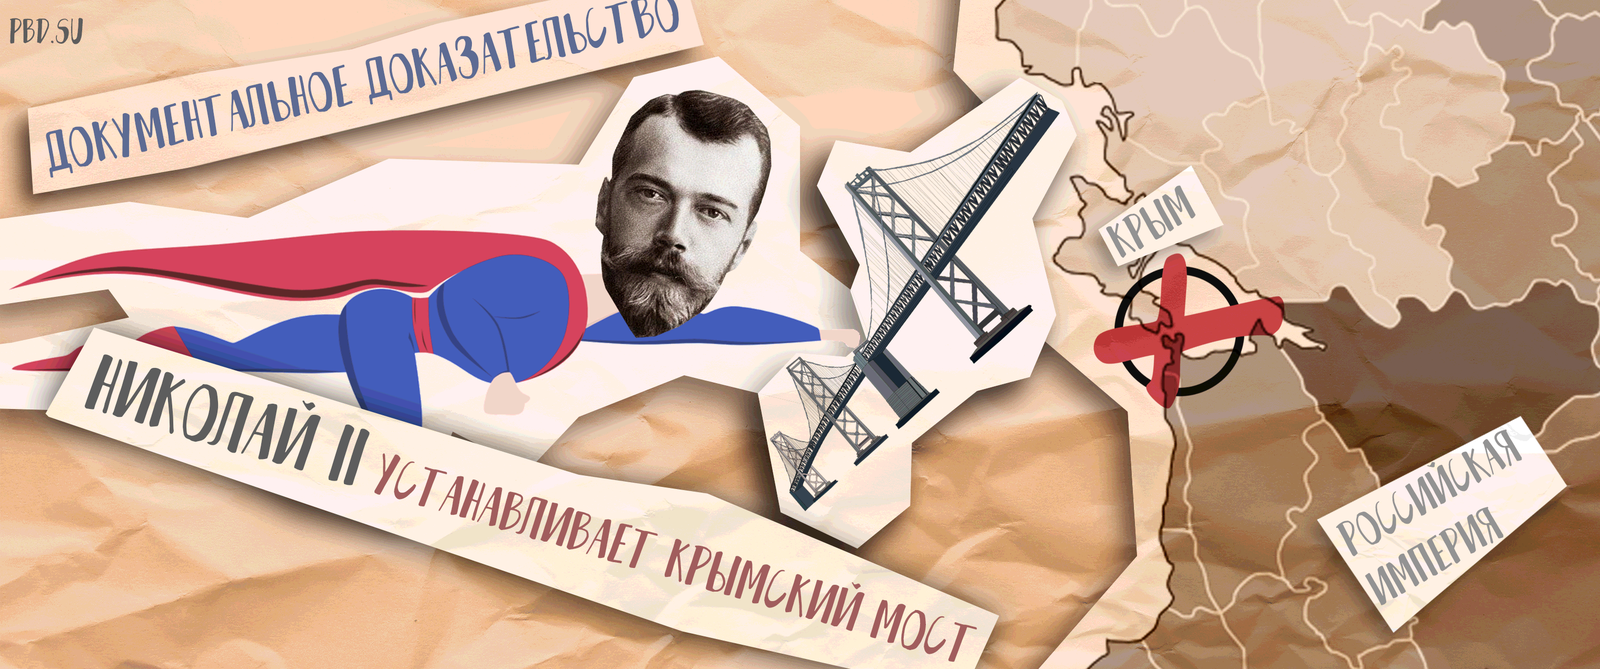 Crimean bridge of Nicholas II - My, Politics, Humor, RCMP, Poster, Nicholas II, Crimean bridge